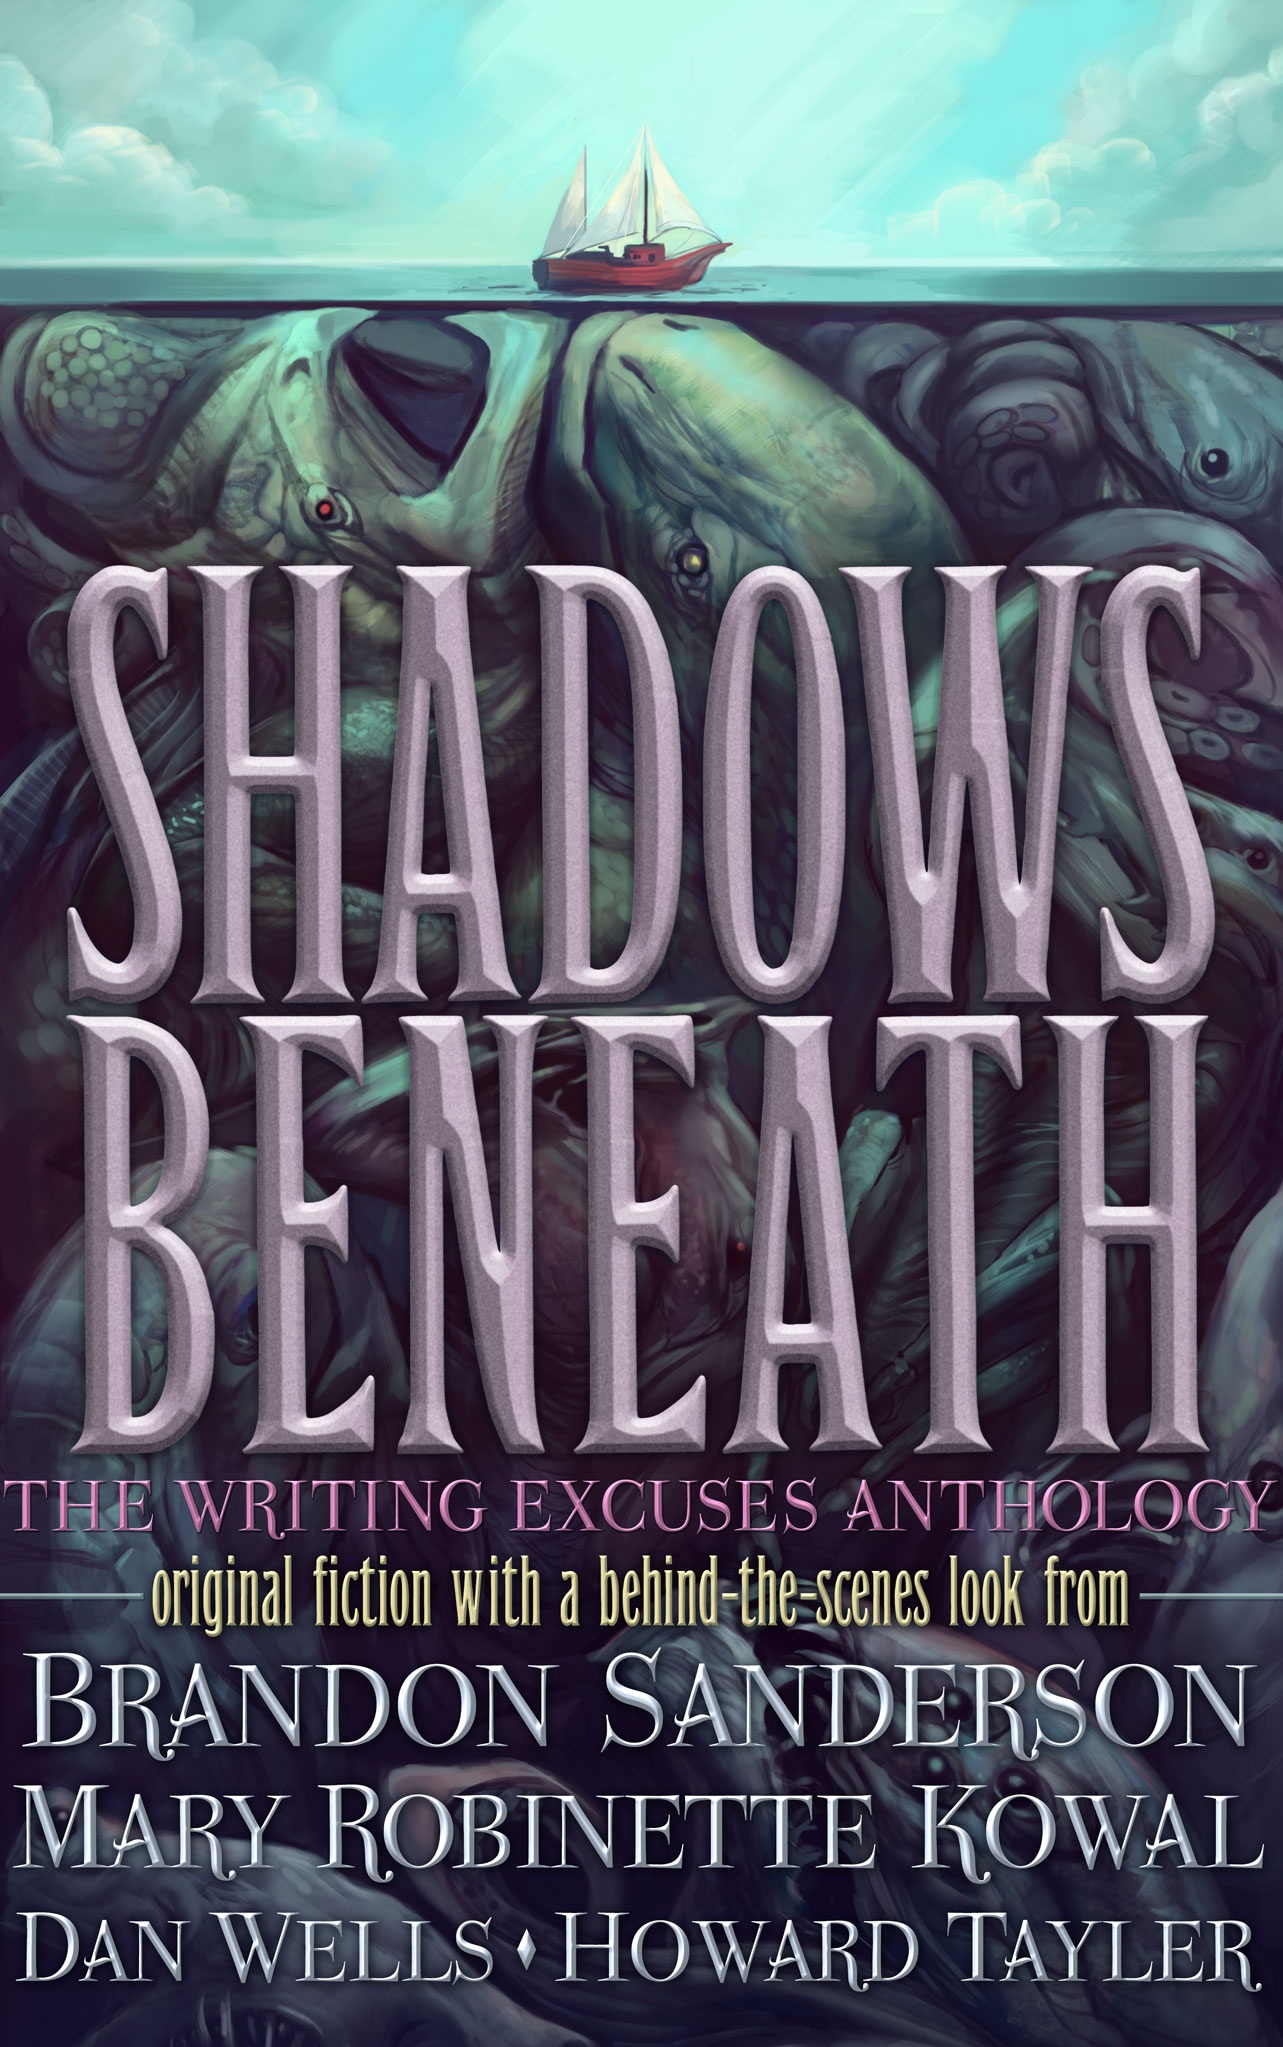 Shadows Beneath: The Writing Excuses Anthology